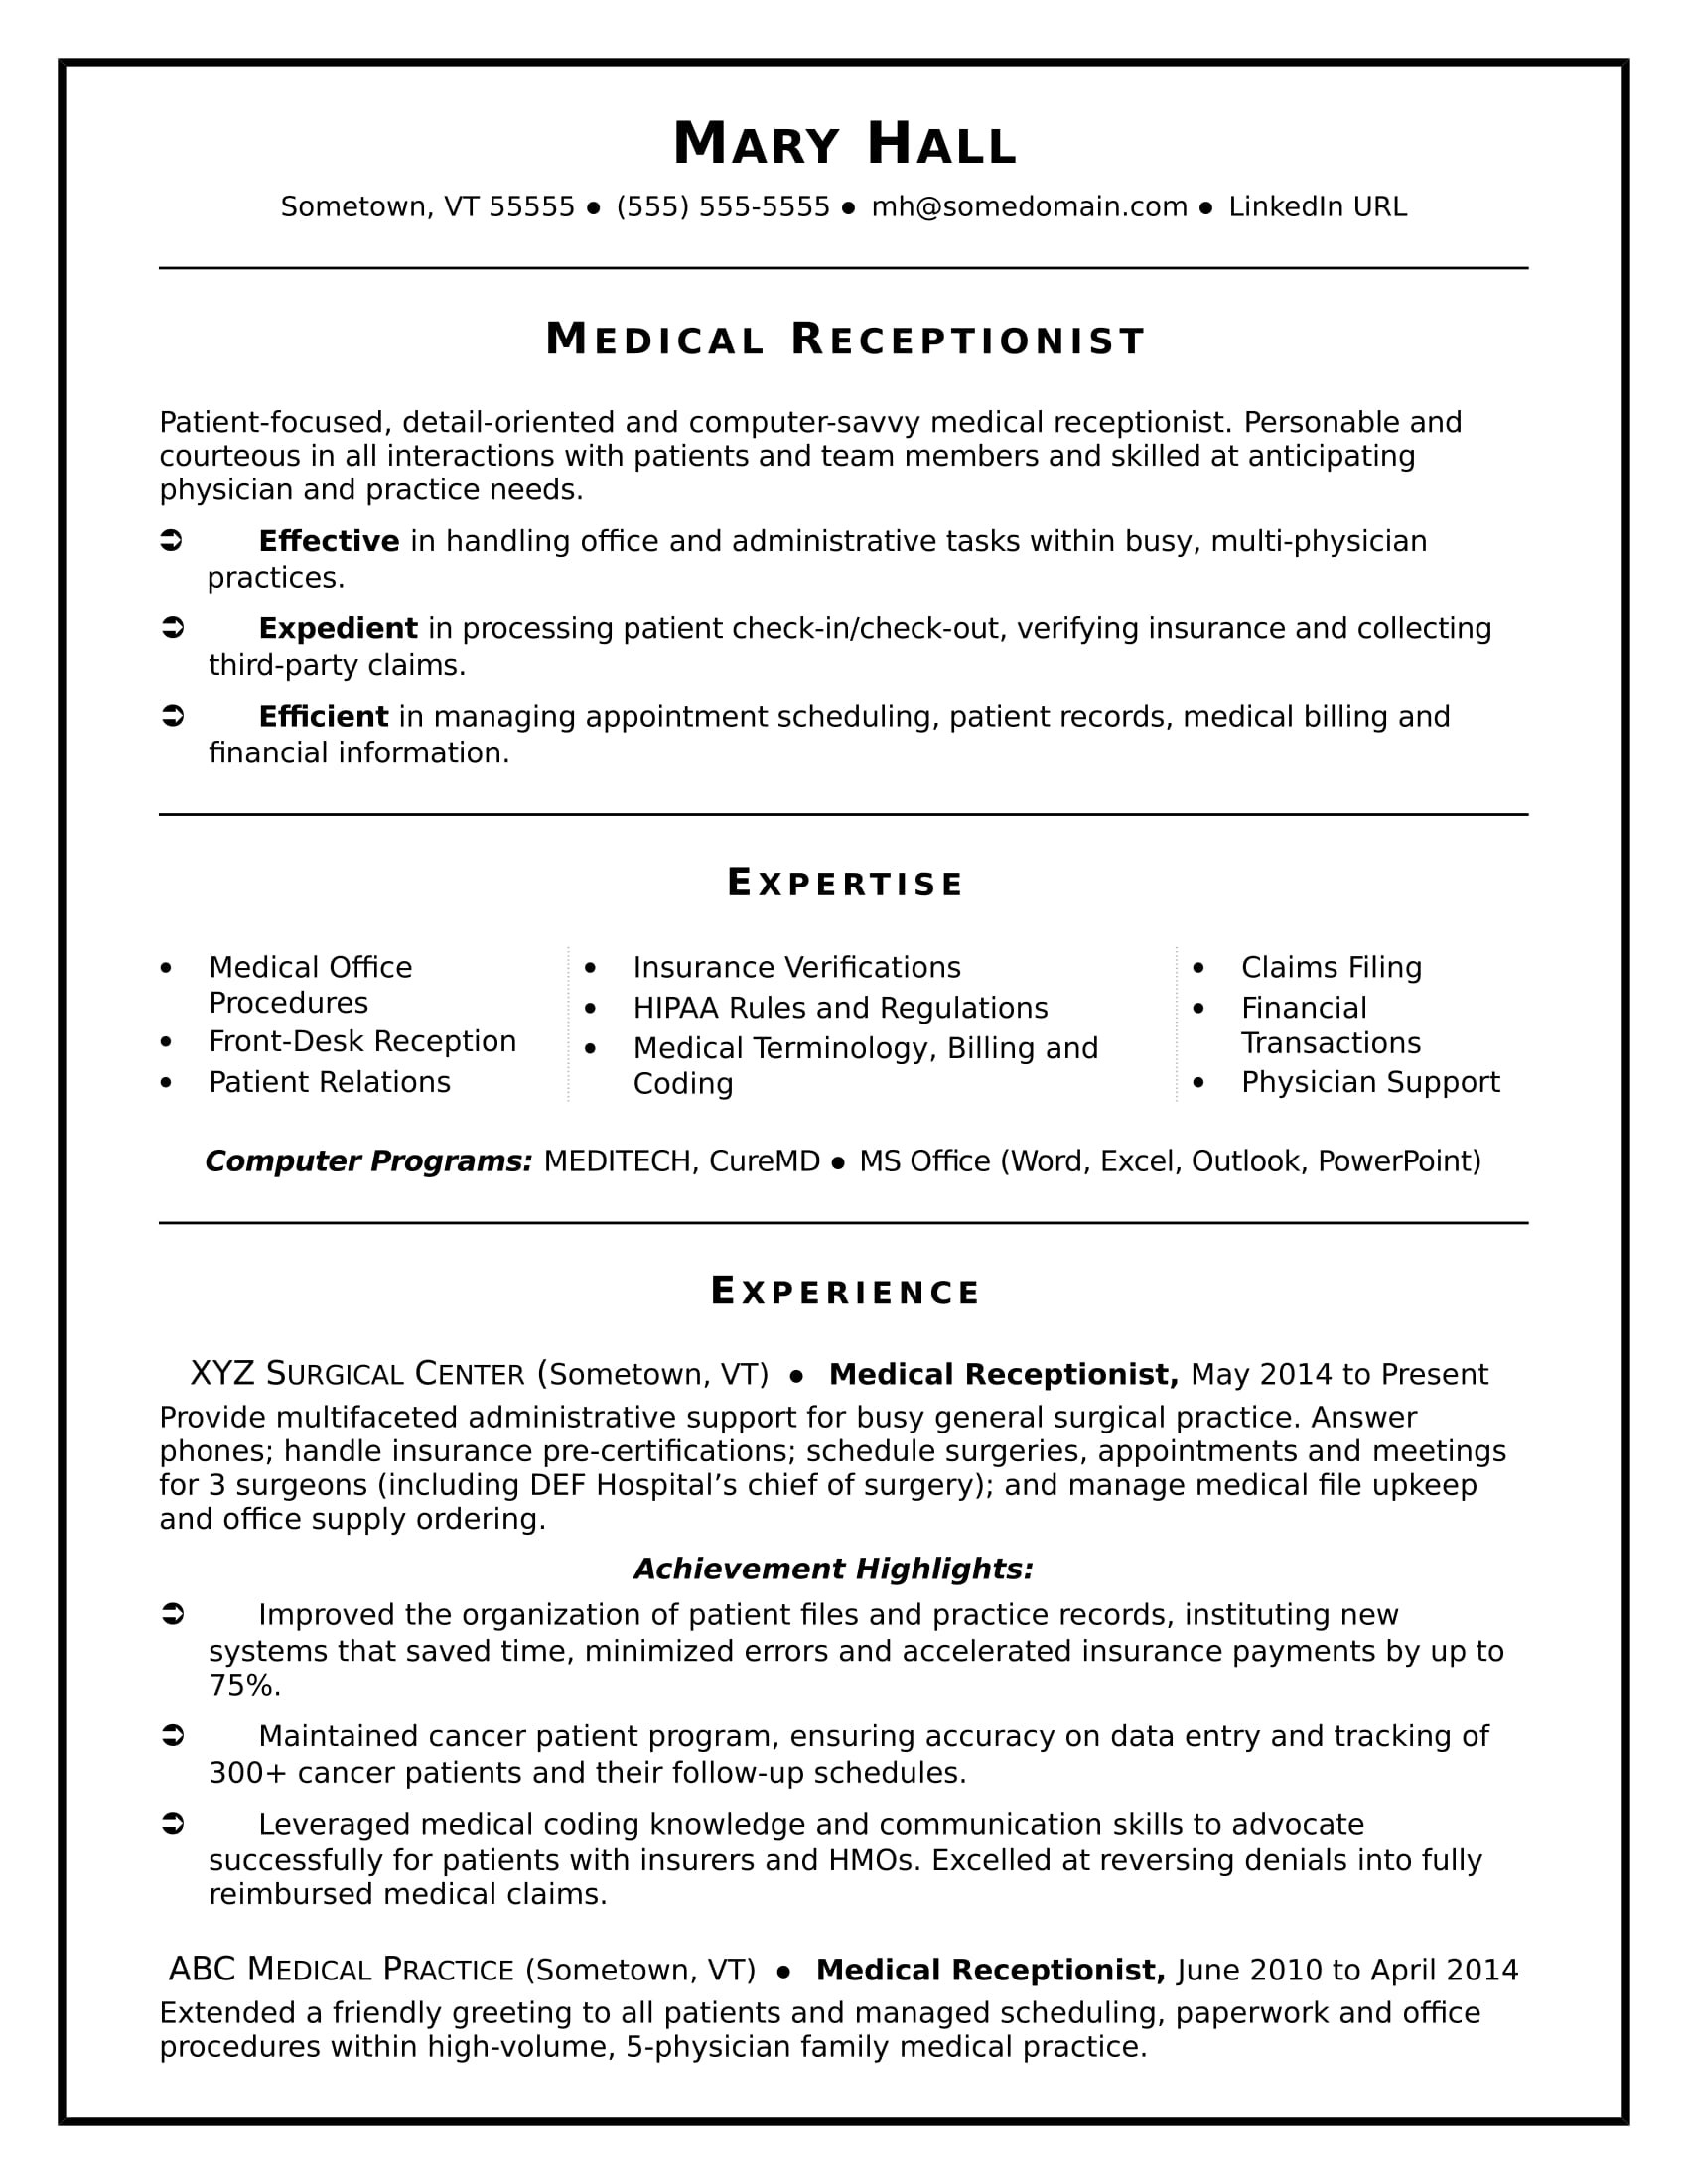 Rec attendant Sample Resume No Experience Medical Receptionist Resume Sample Monster.com